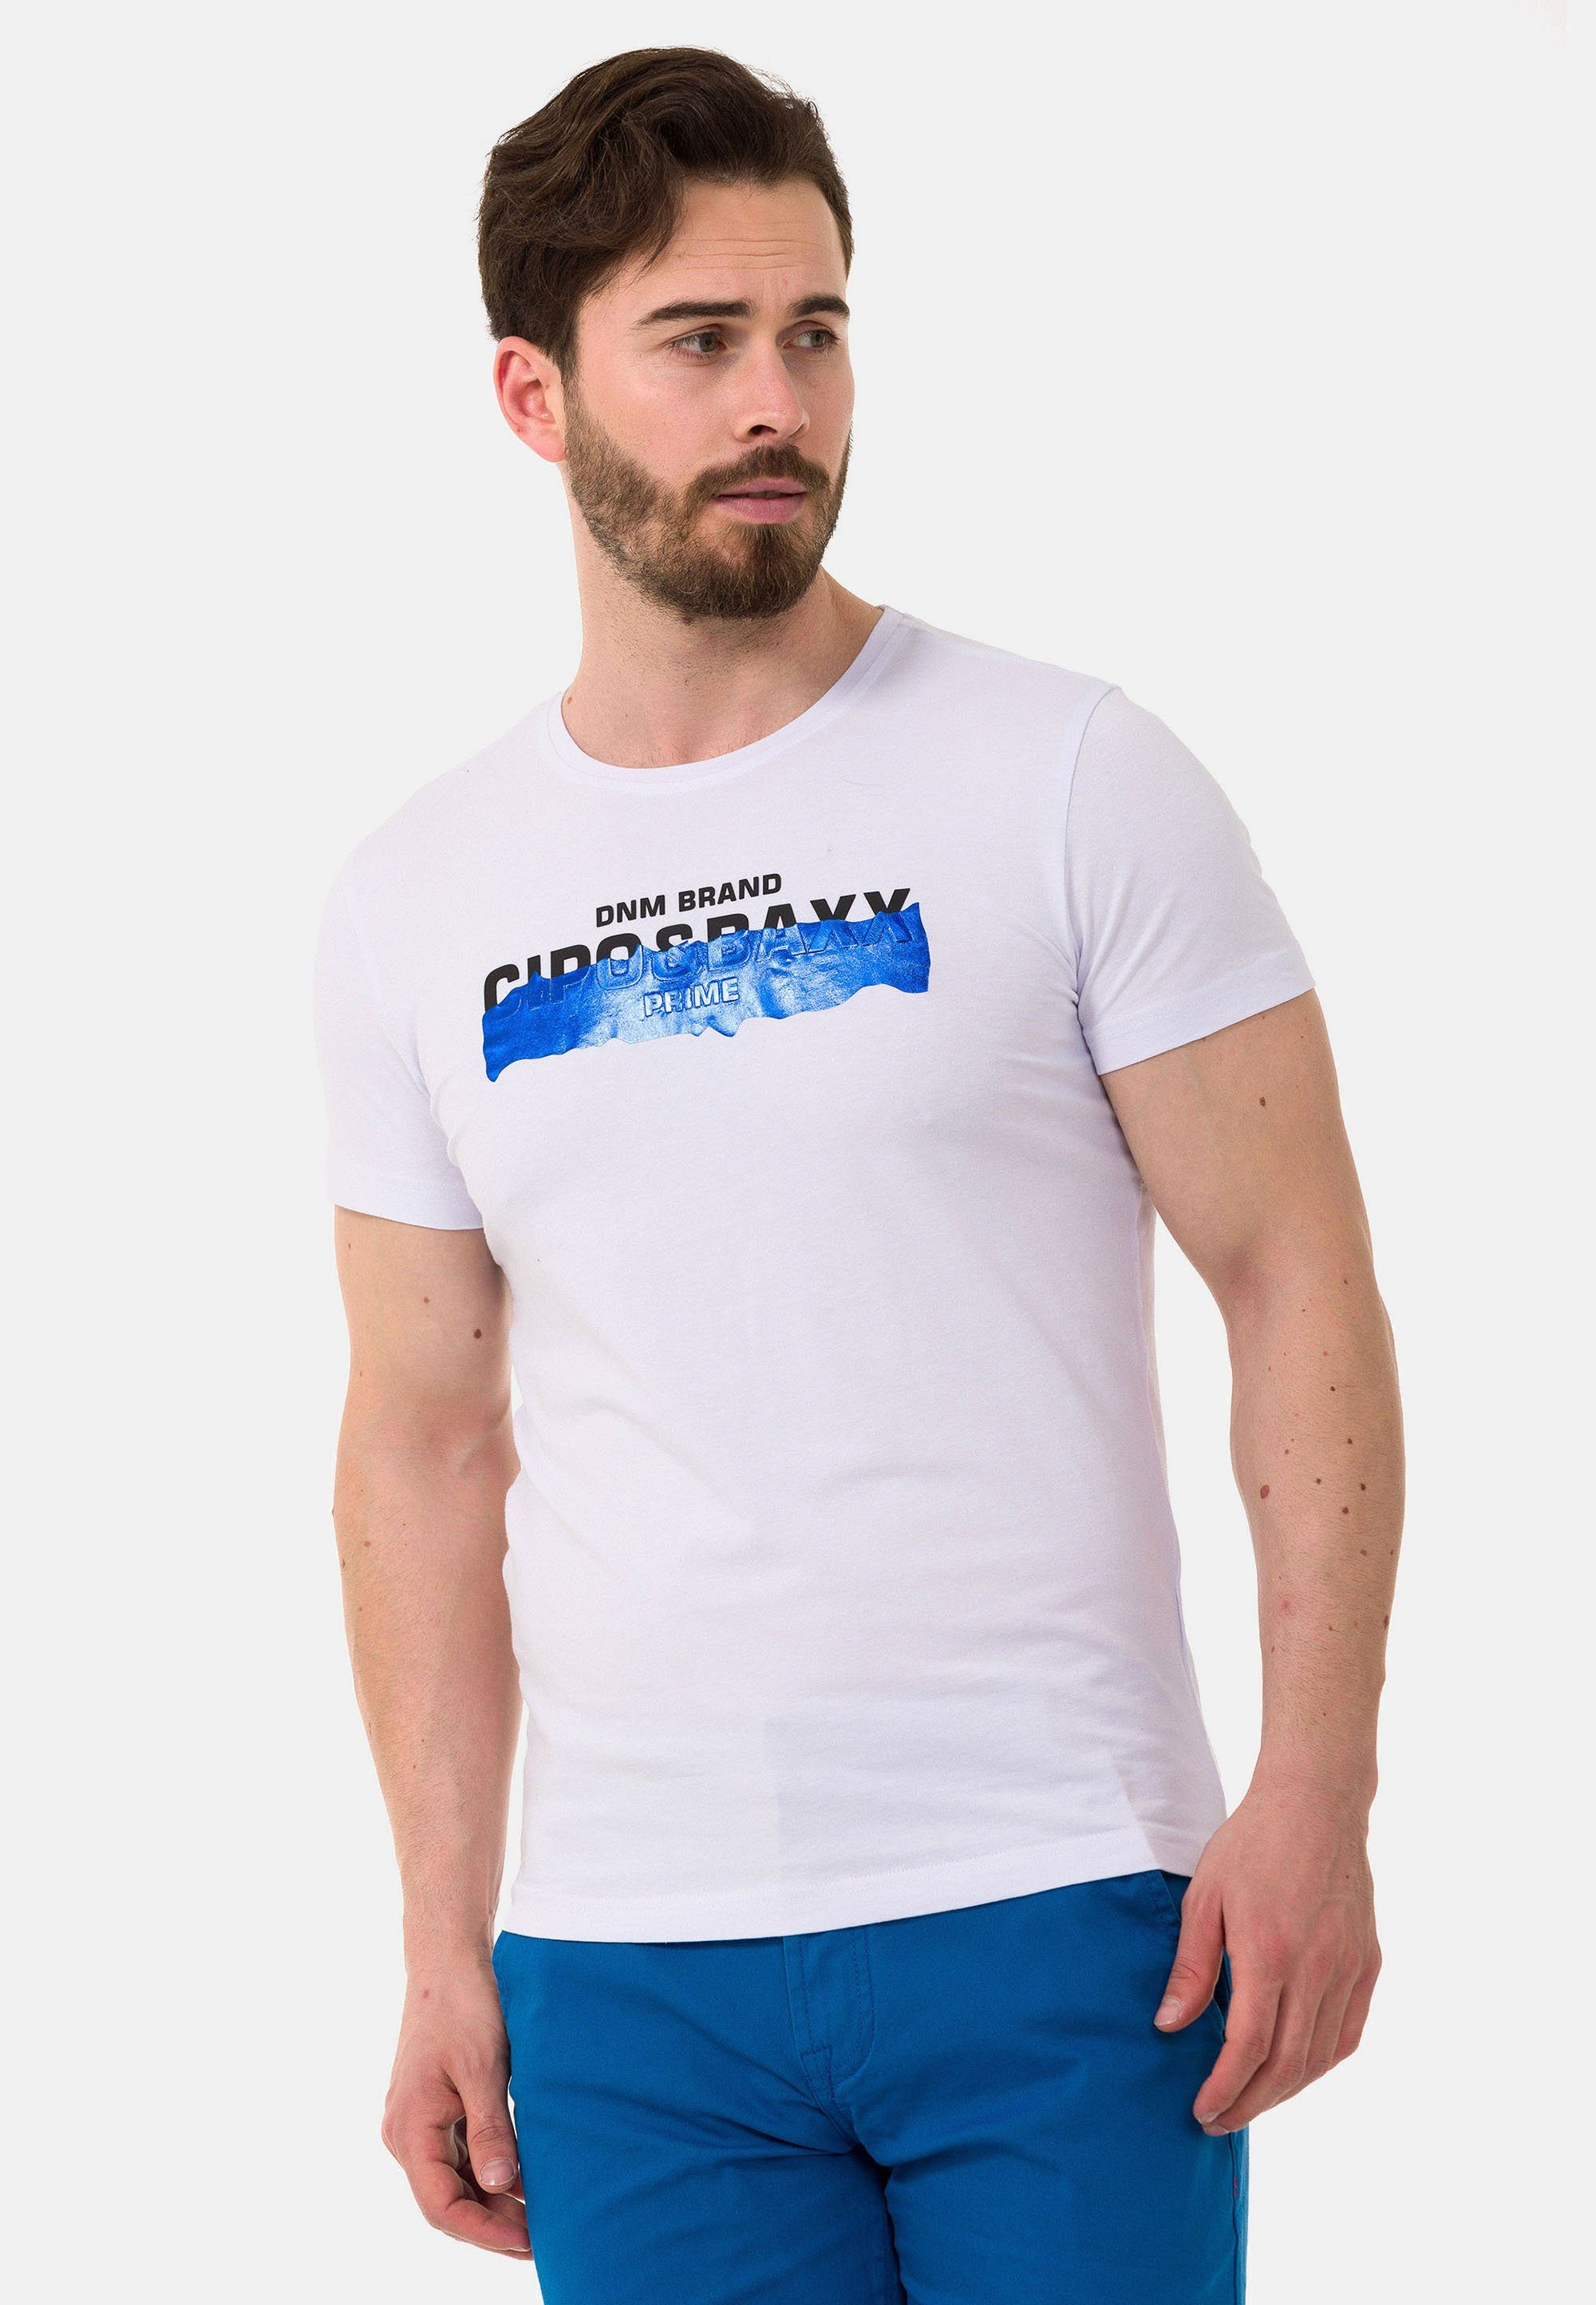 Baxx T-Shirt & weiß Cipo Markenprint coolem mit